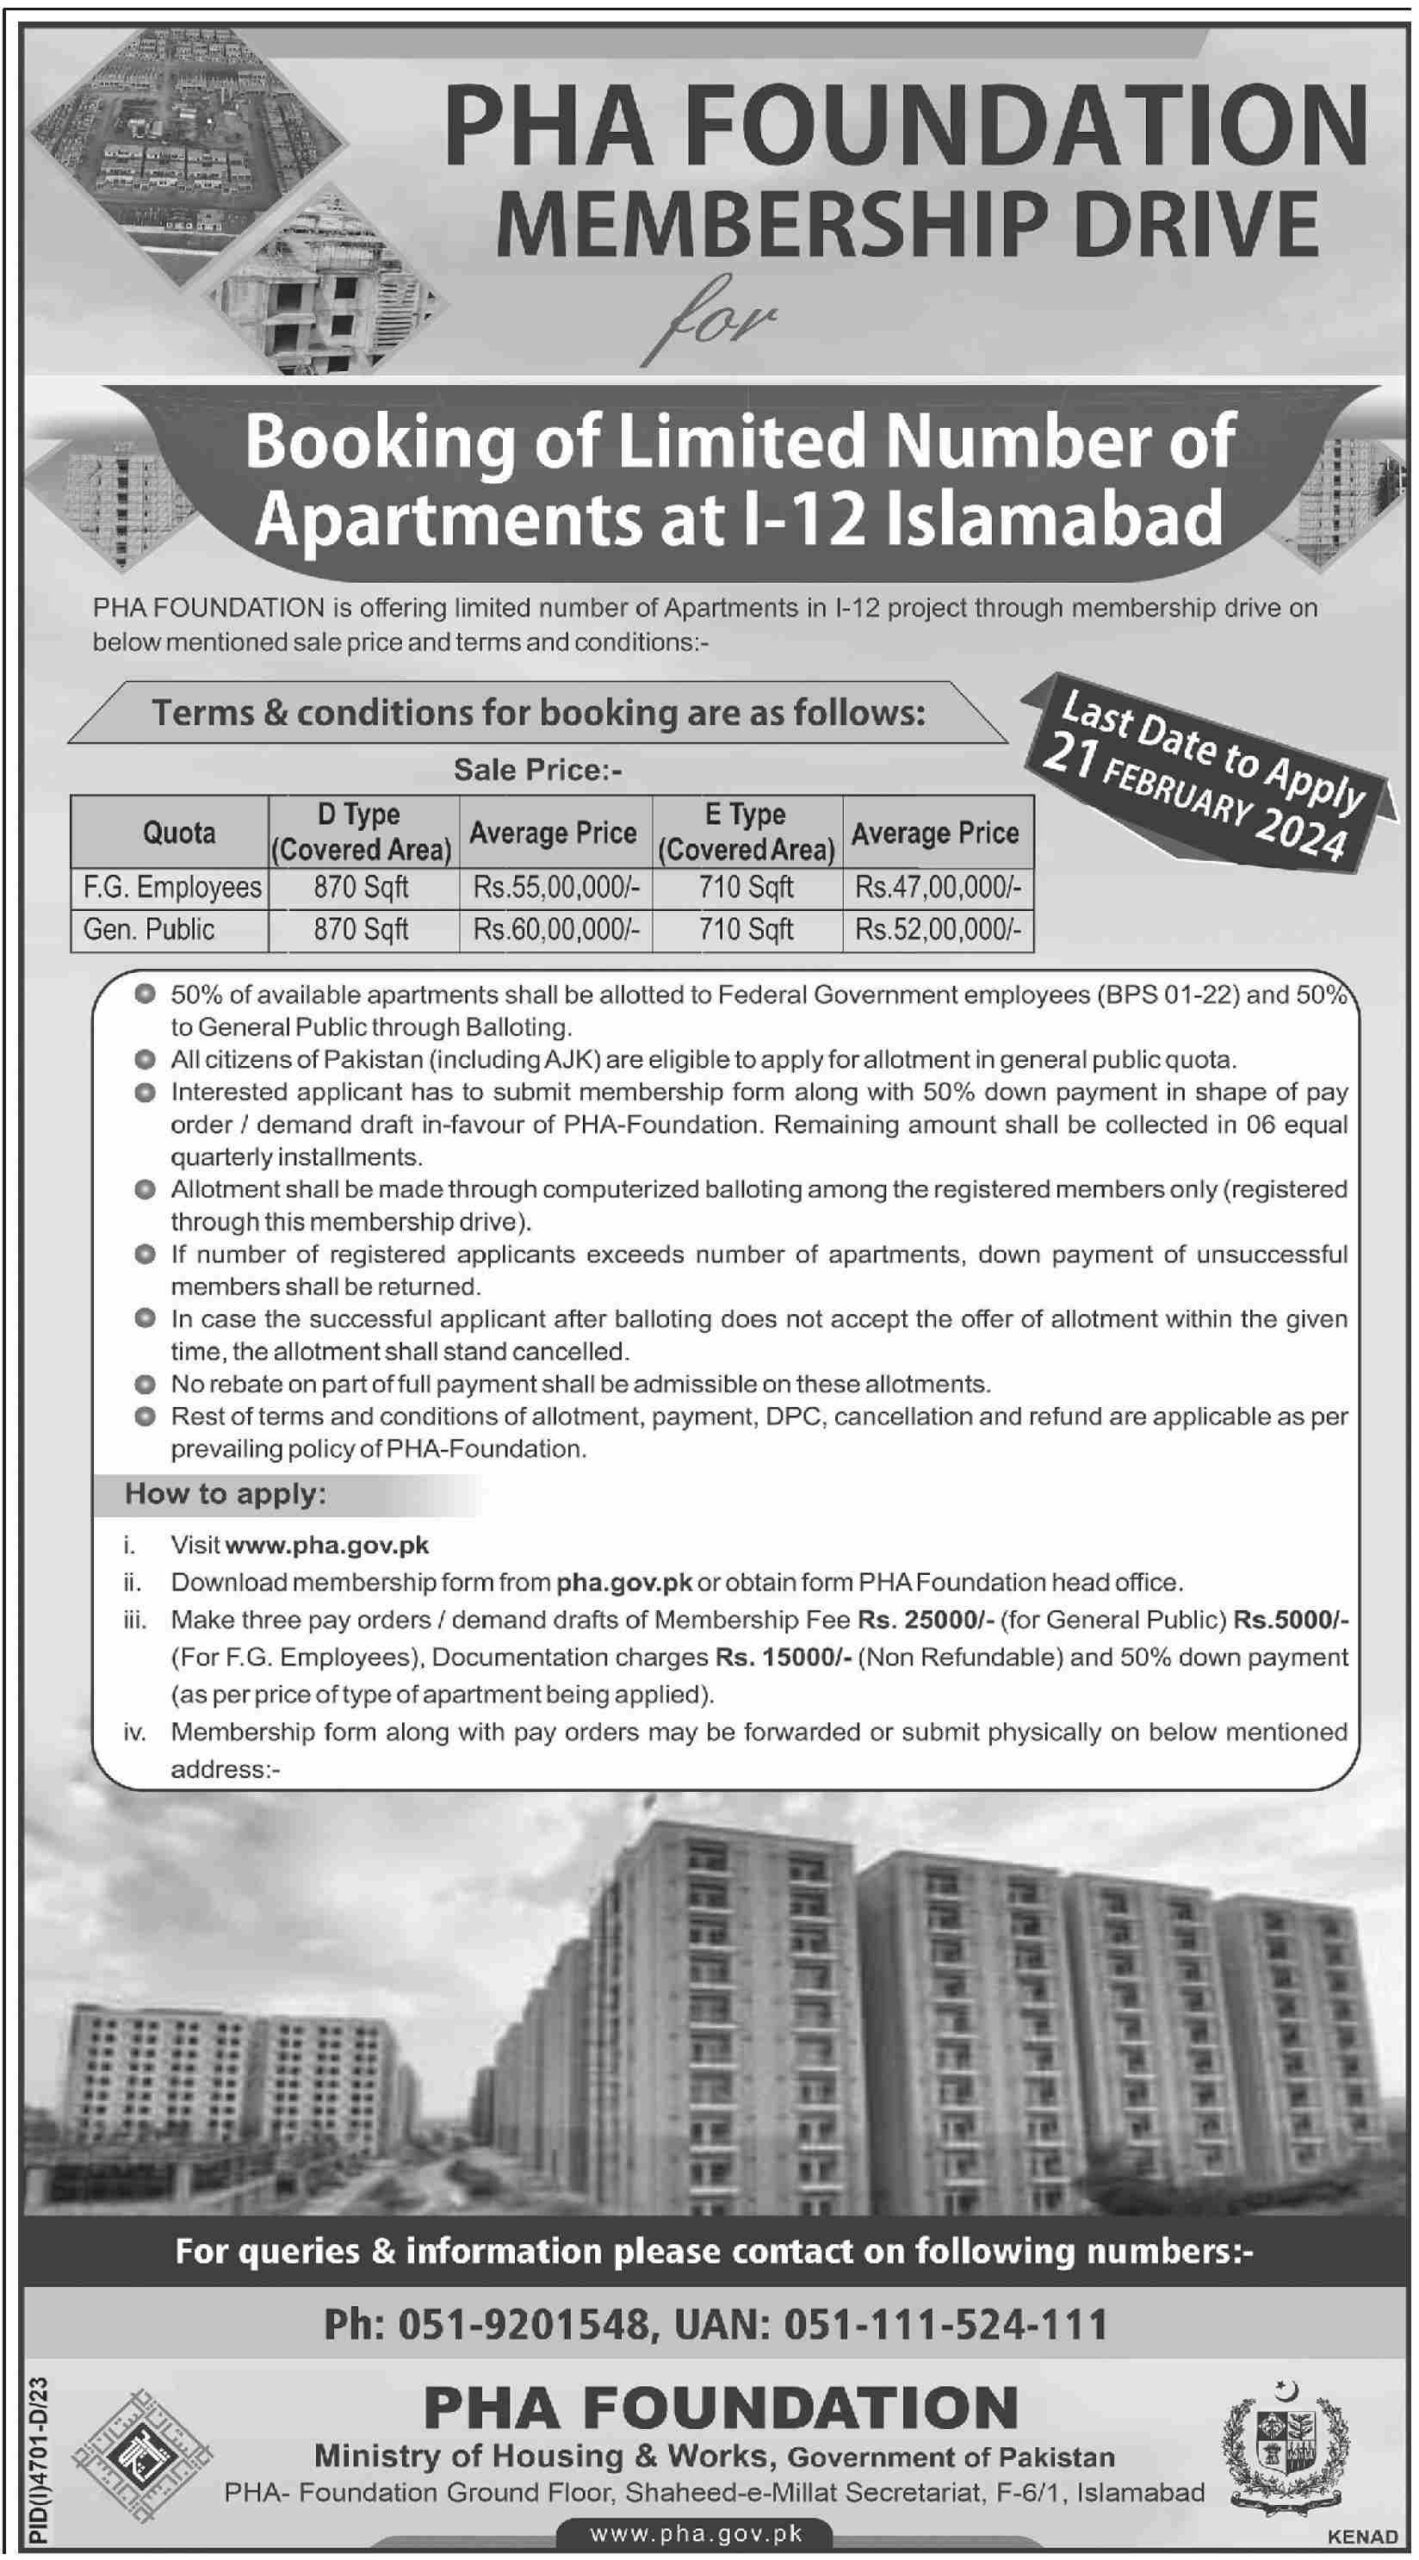 PHA Foundation Membership Drive For Apartments at I-12 Islamabad